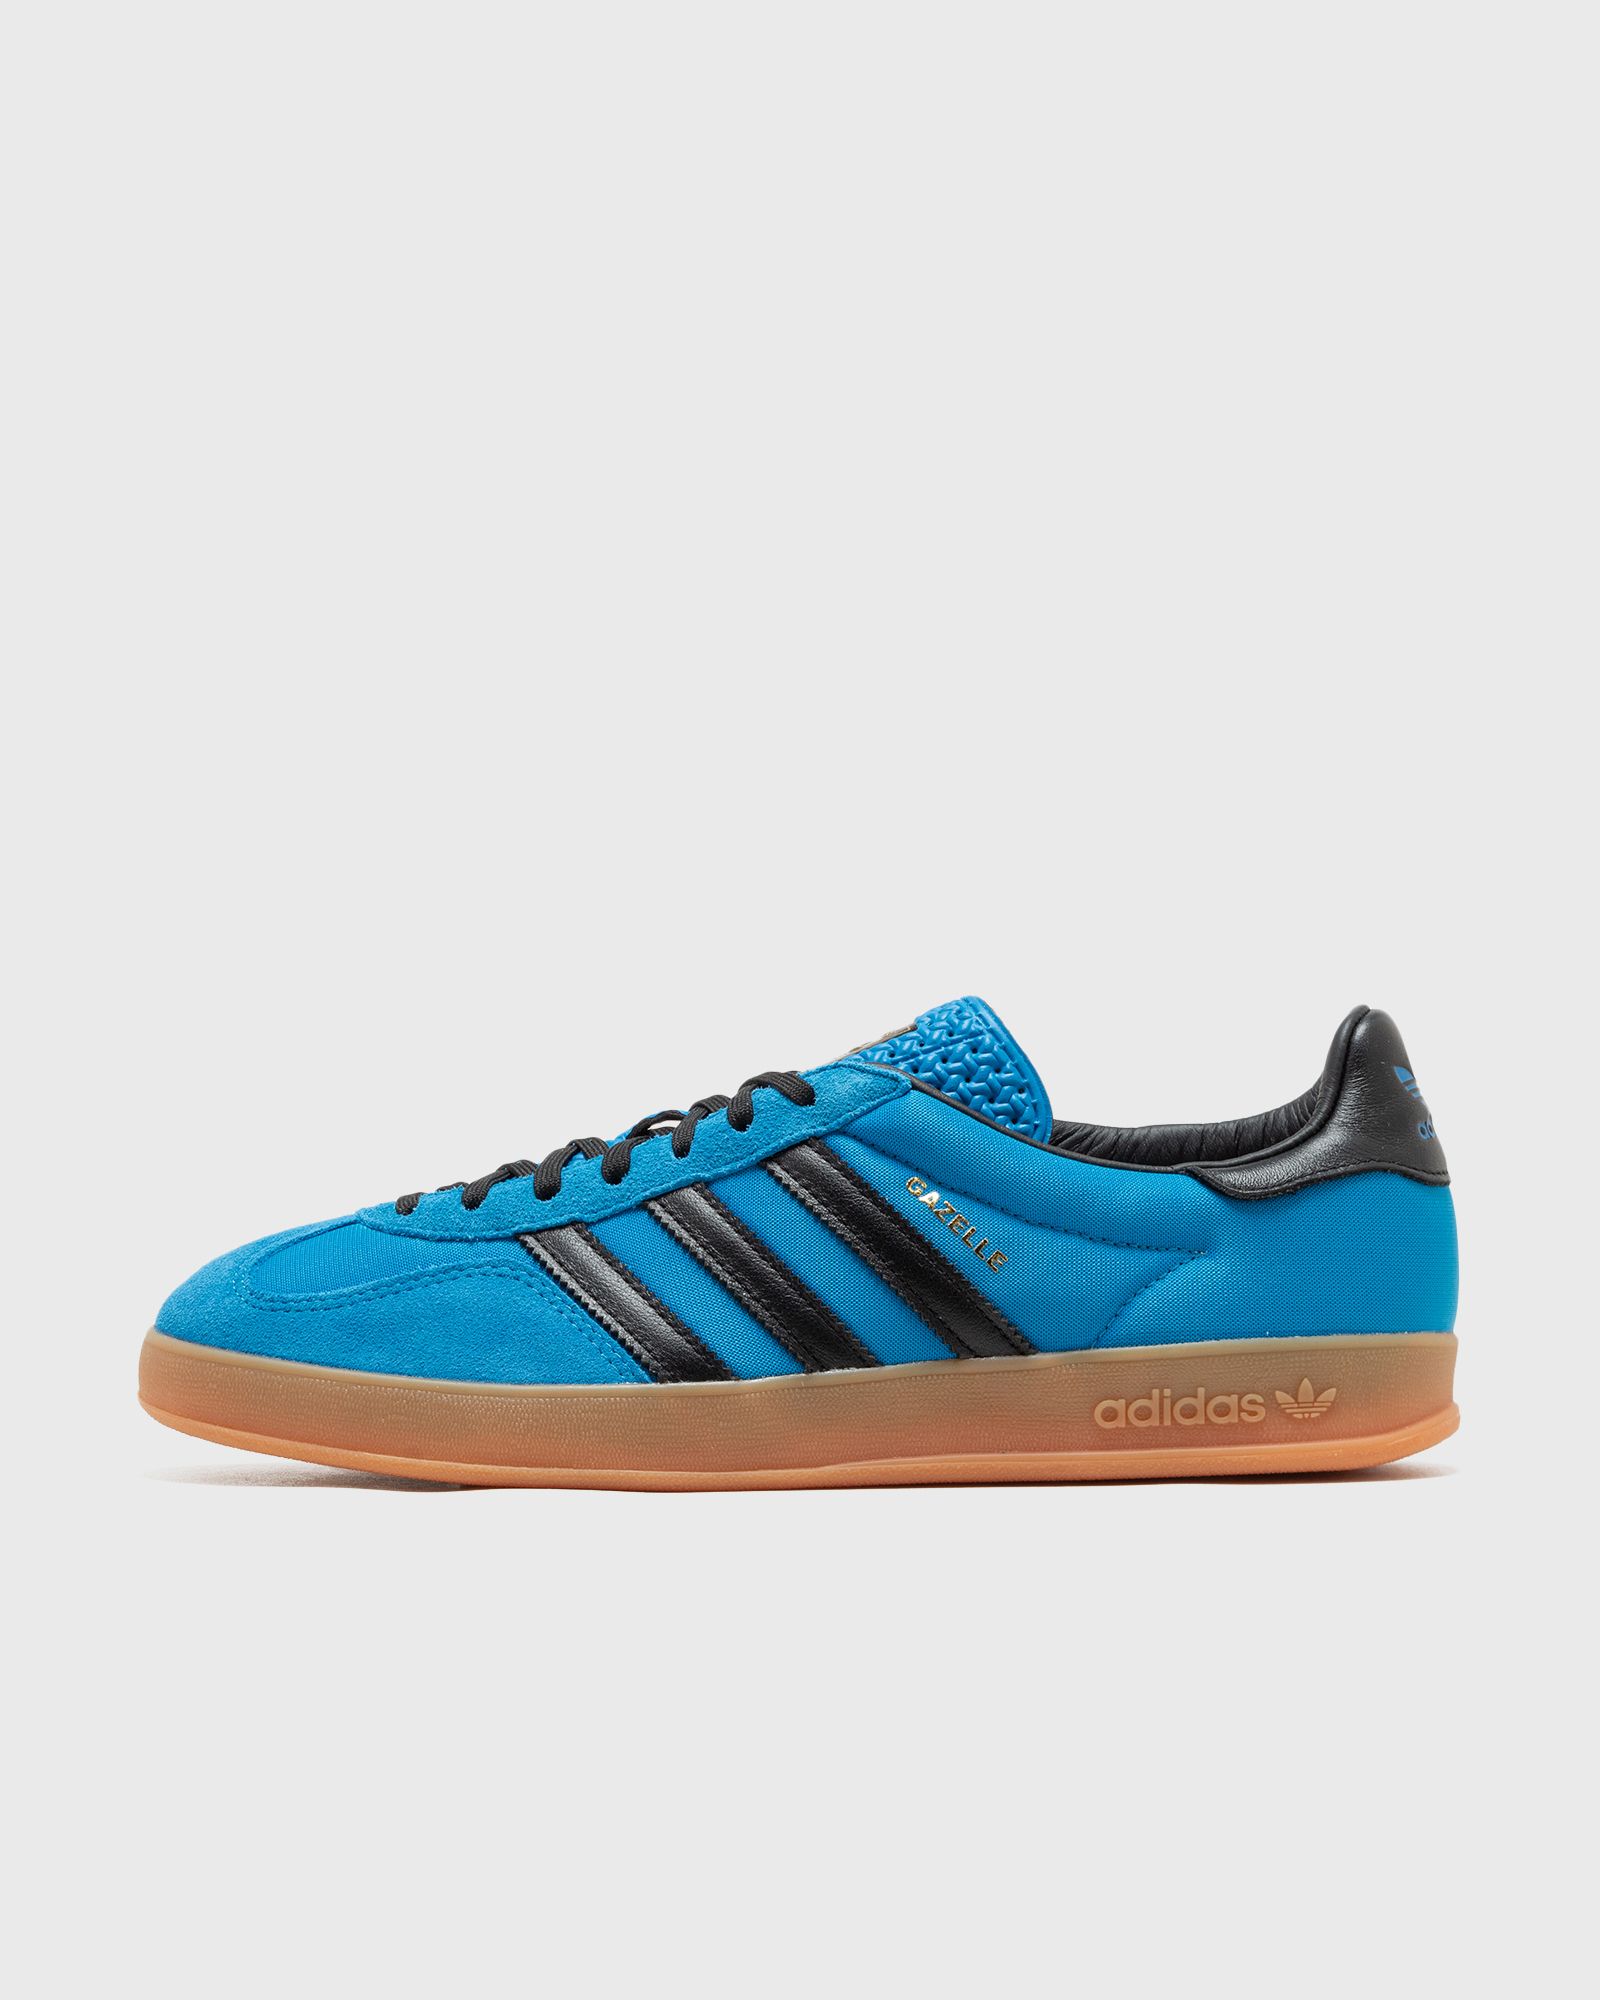 Adidas - gazelle indoor men lowtop blue in größe:44 2/3